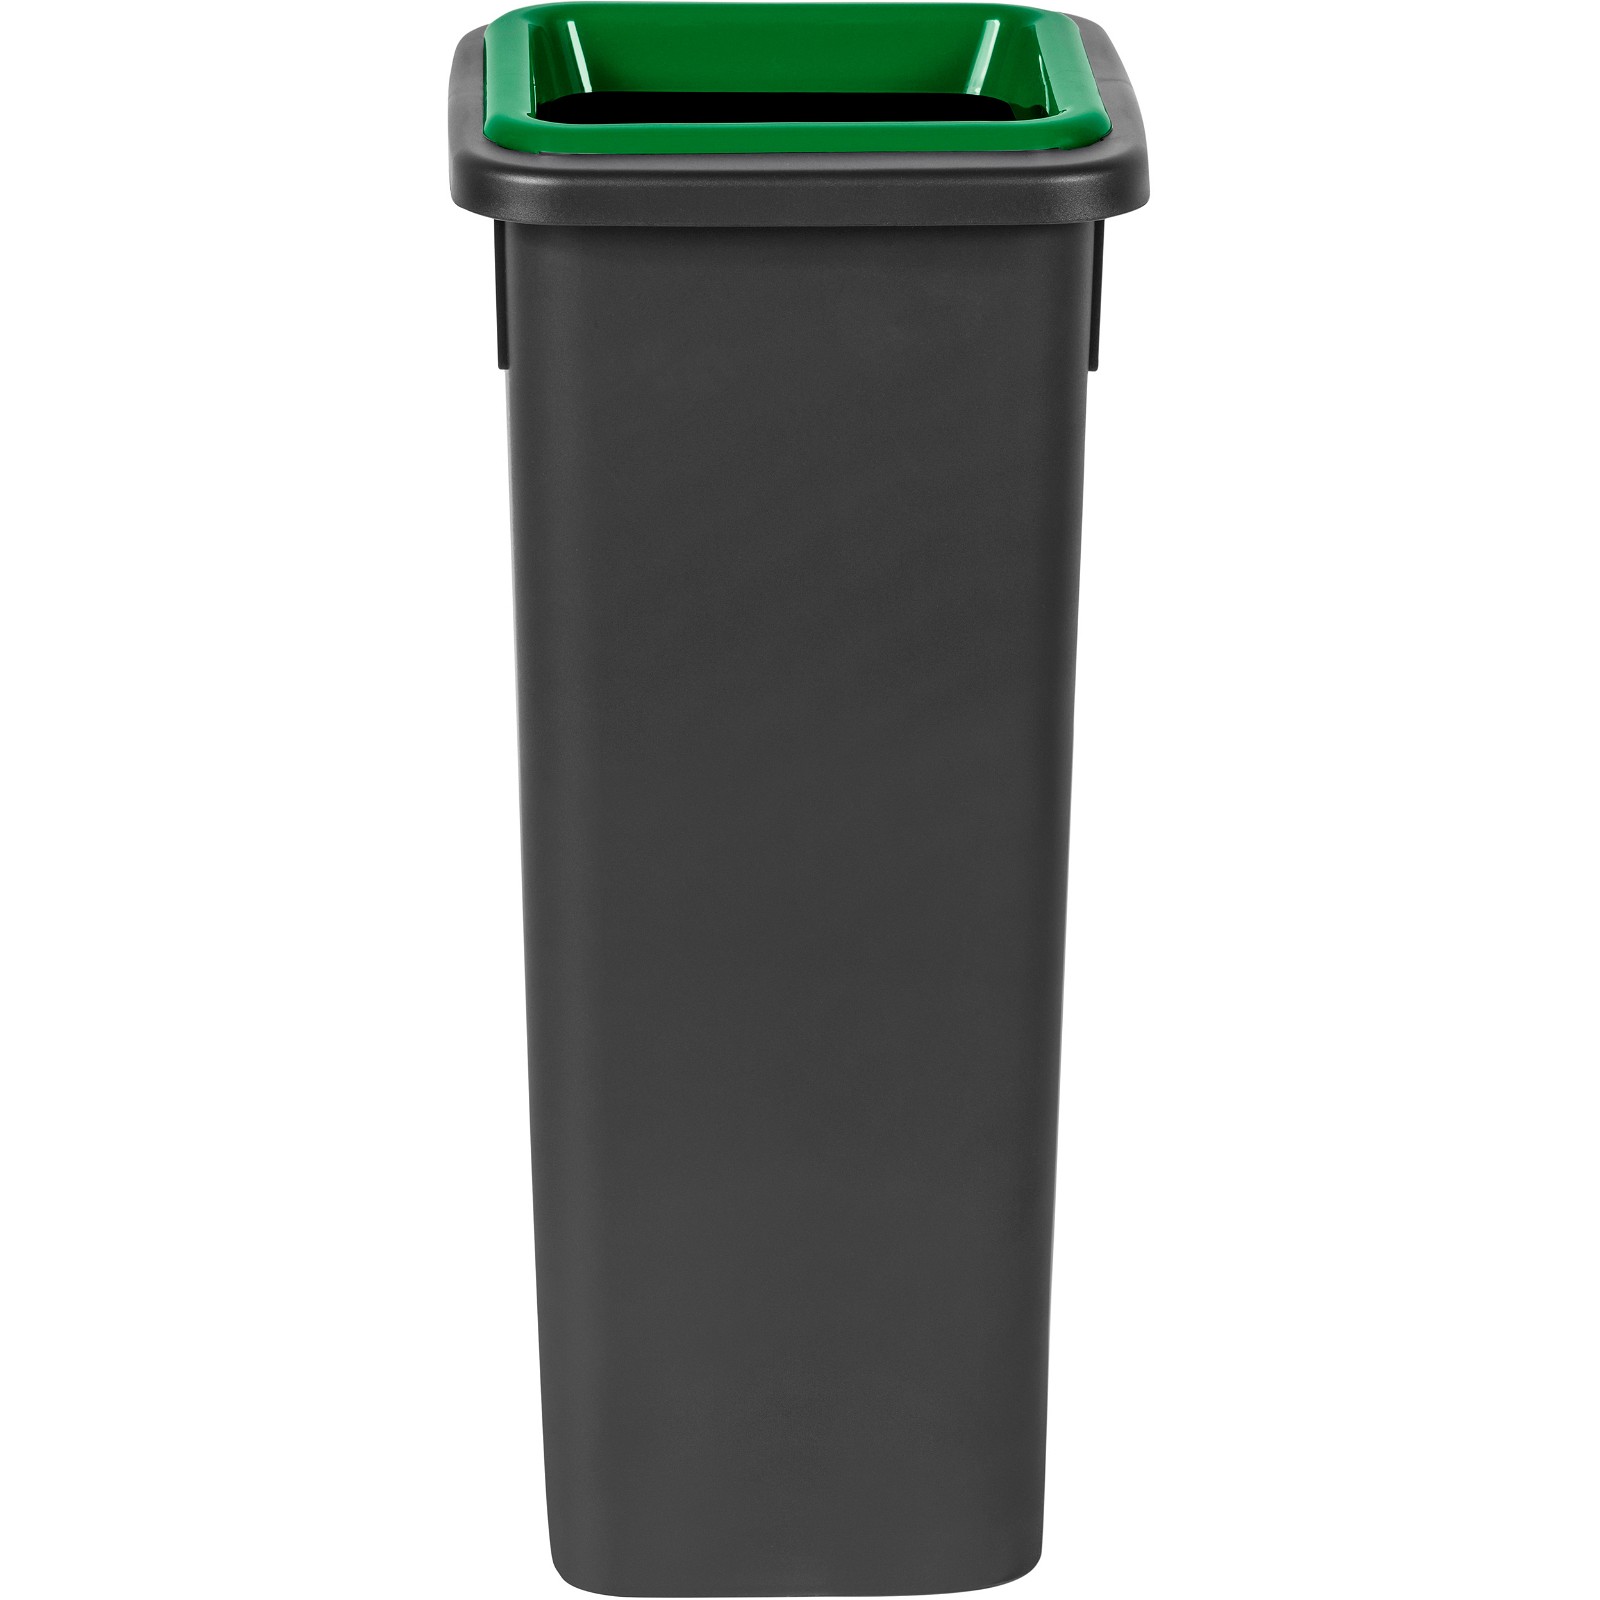 Style affaldsspand 20L grøn